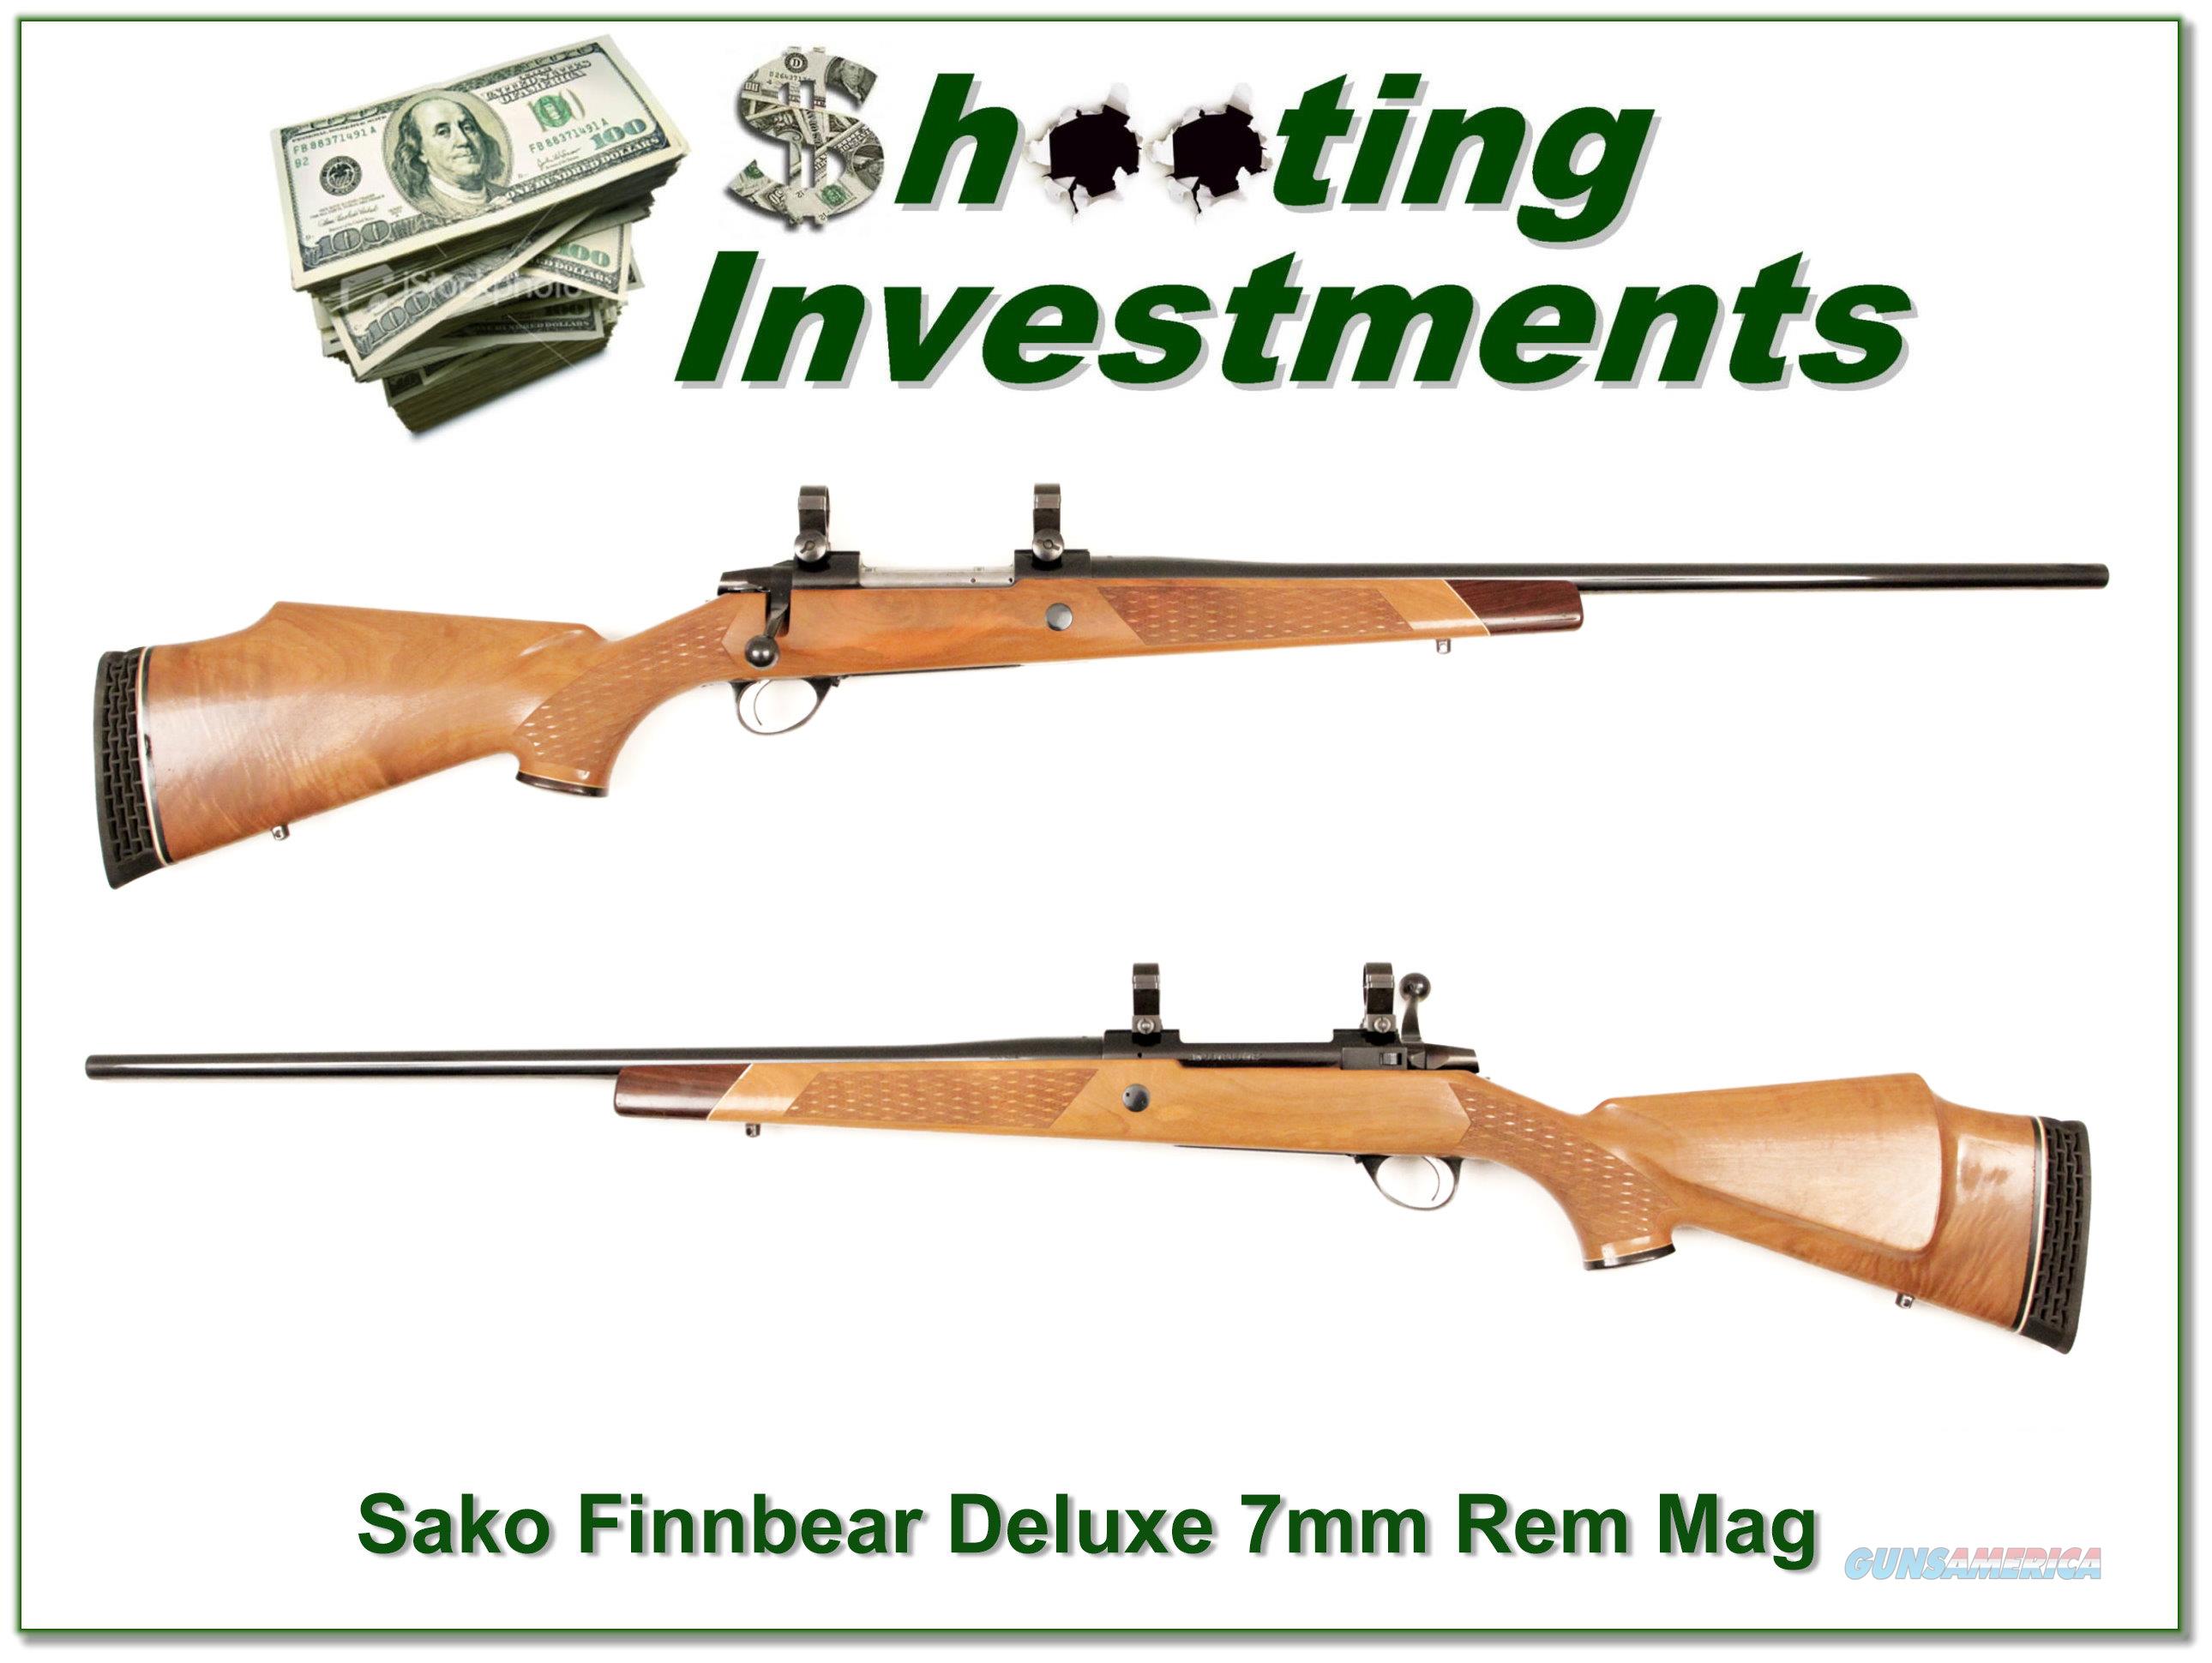 limb saver kick pad for the sako finnbear 7mm mag rifle